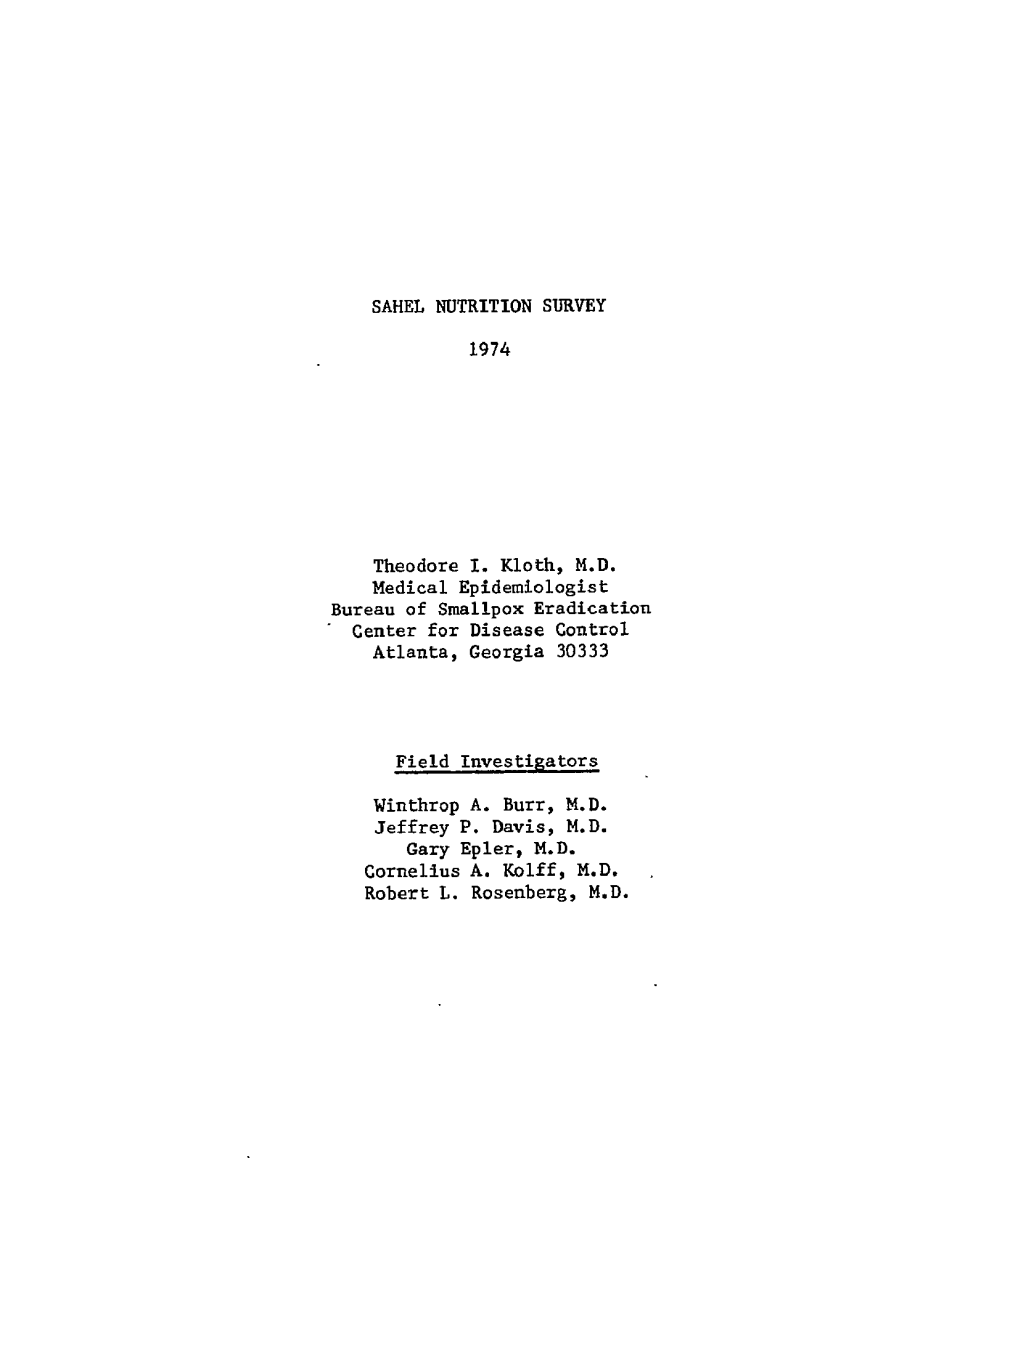 SAHEL NUTRITION SURVEY 1974 Theodore I. Kloth, M.D. Medical